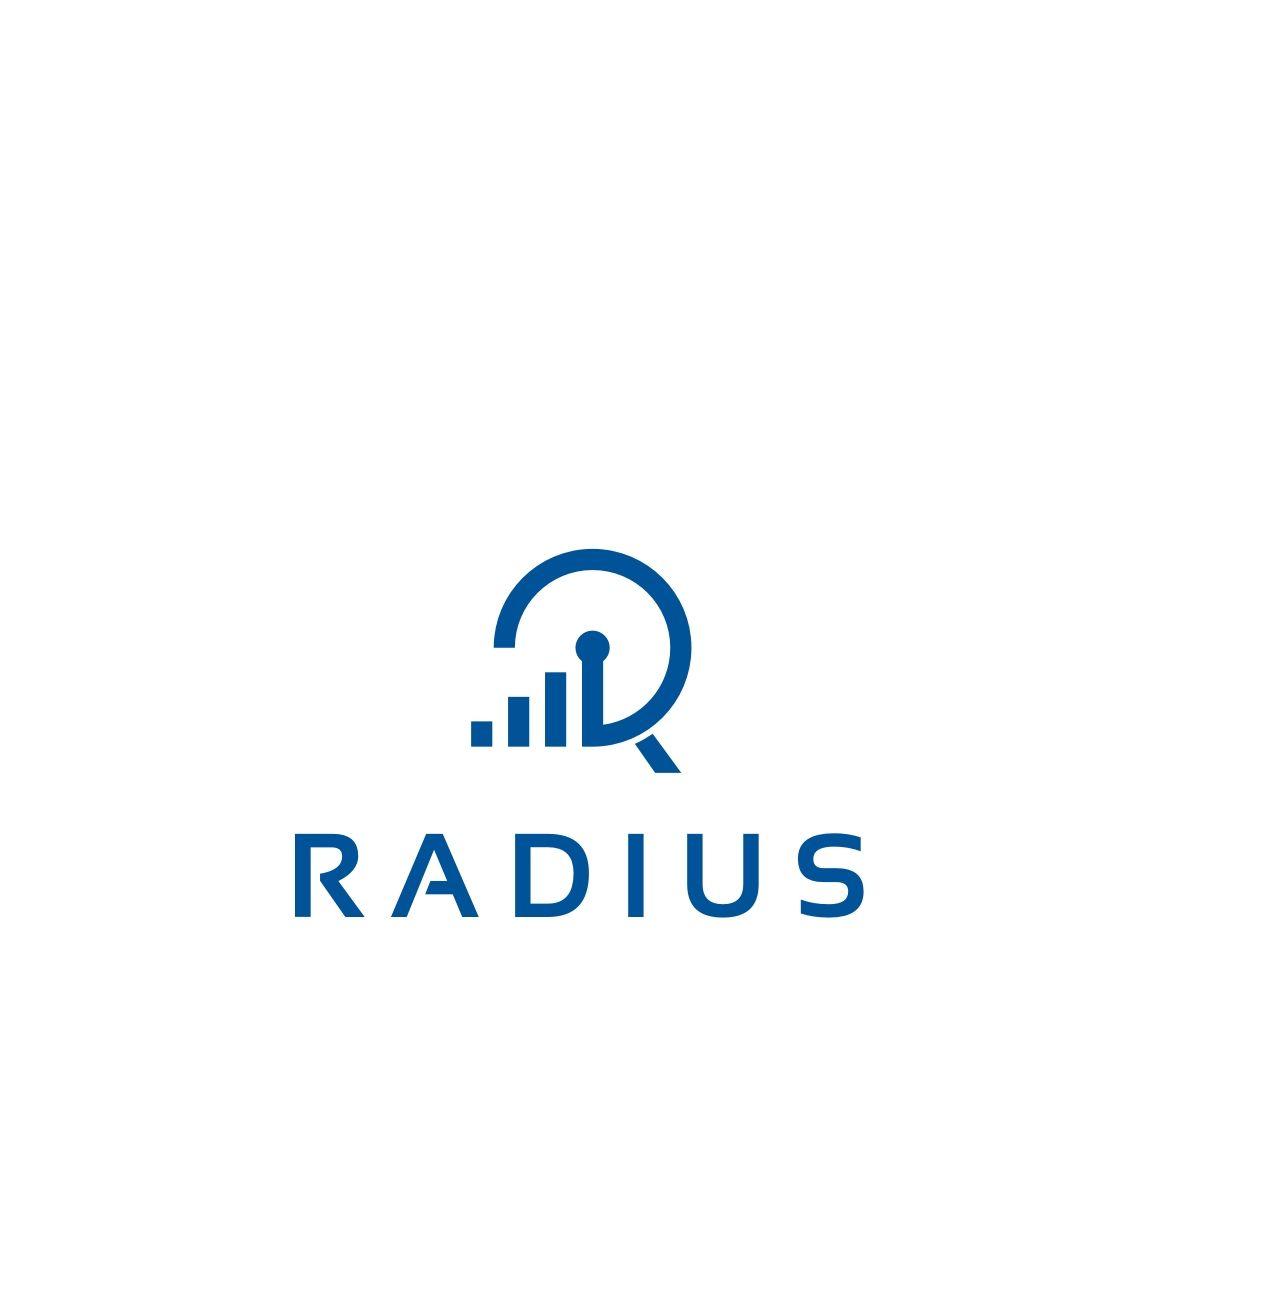 Radius Logo - Bold, Modern, Marketing Logo Design for Radius by derho. Design